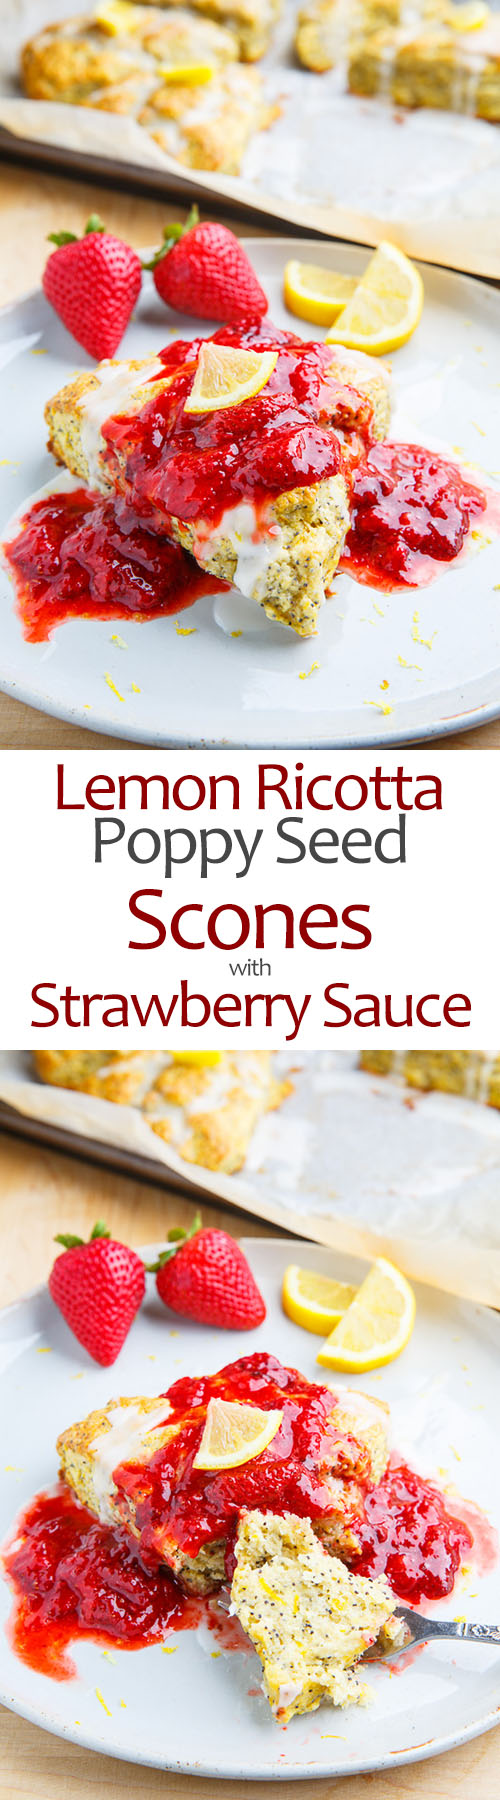 Lemon Poppy Seed Ricotta Scones with Strawberry Sauce